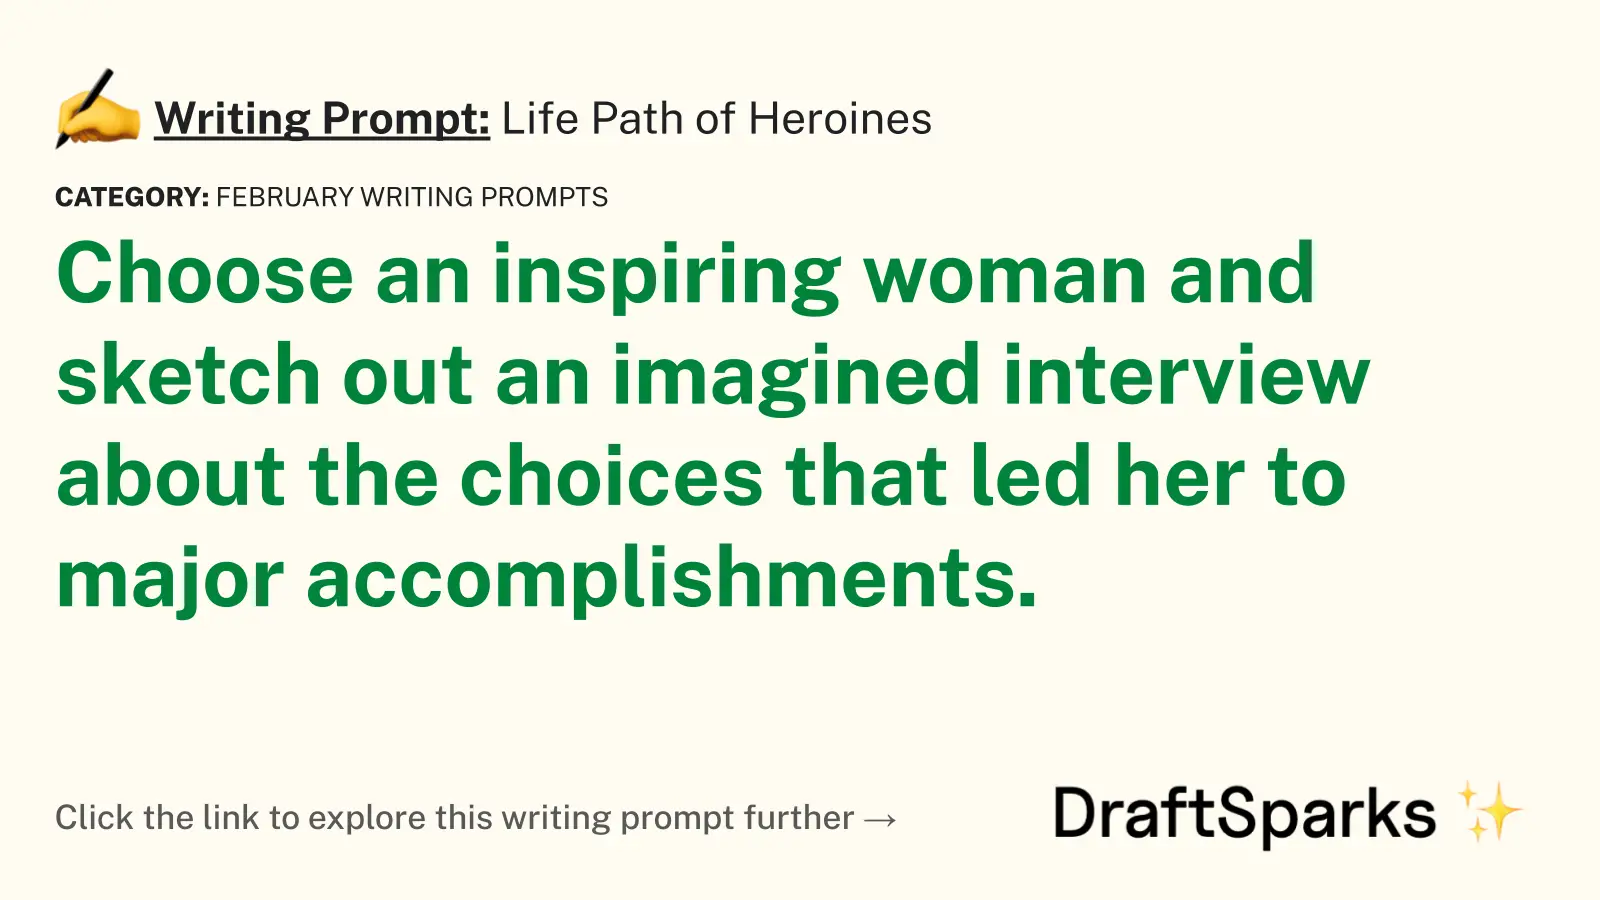 Life Path of Heroines